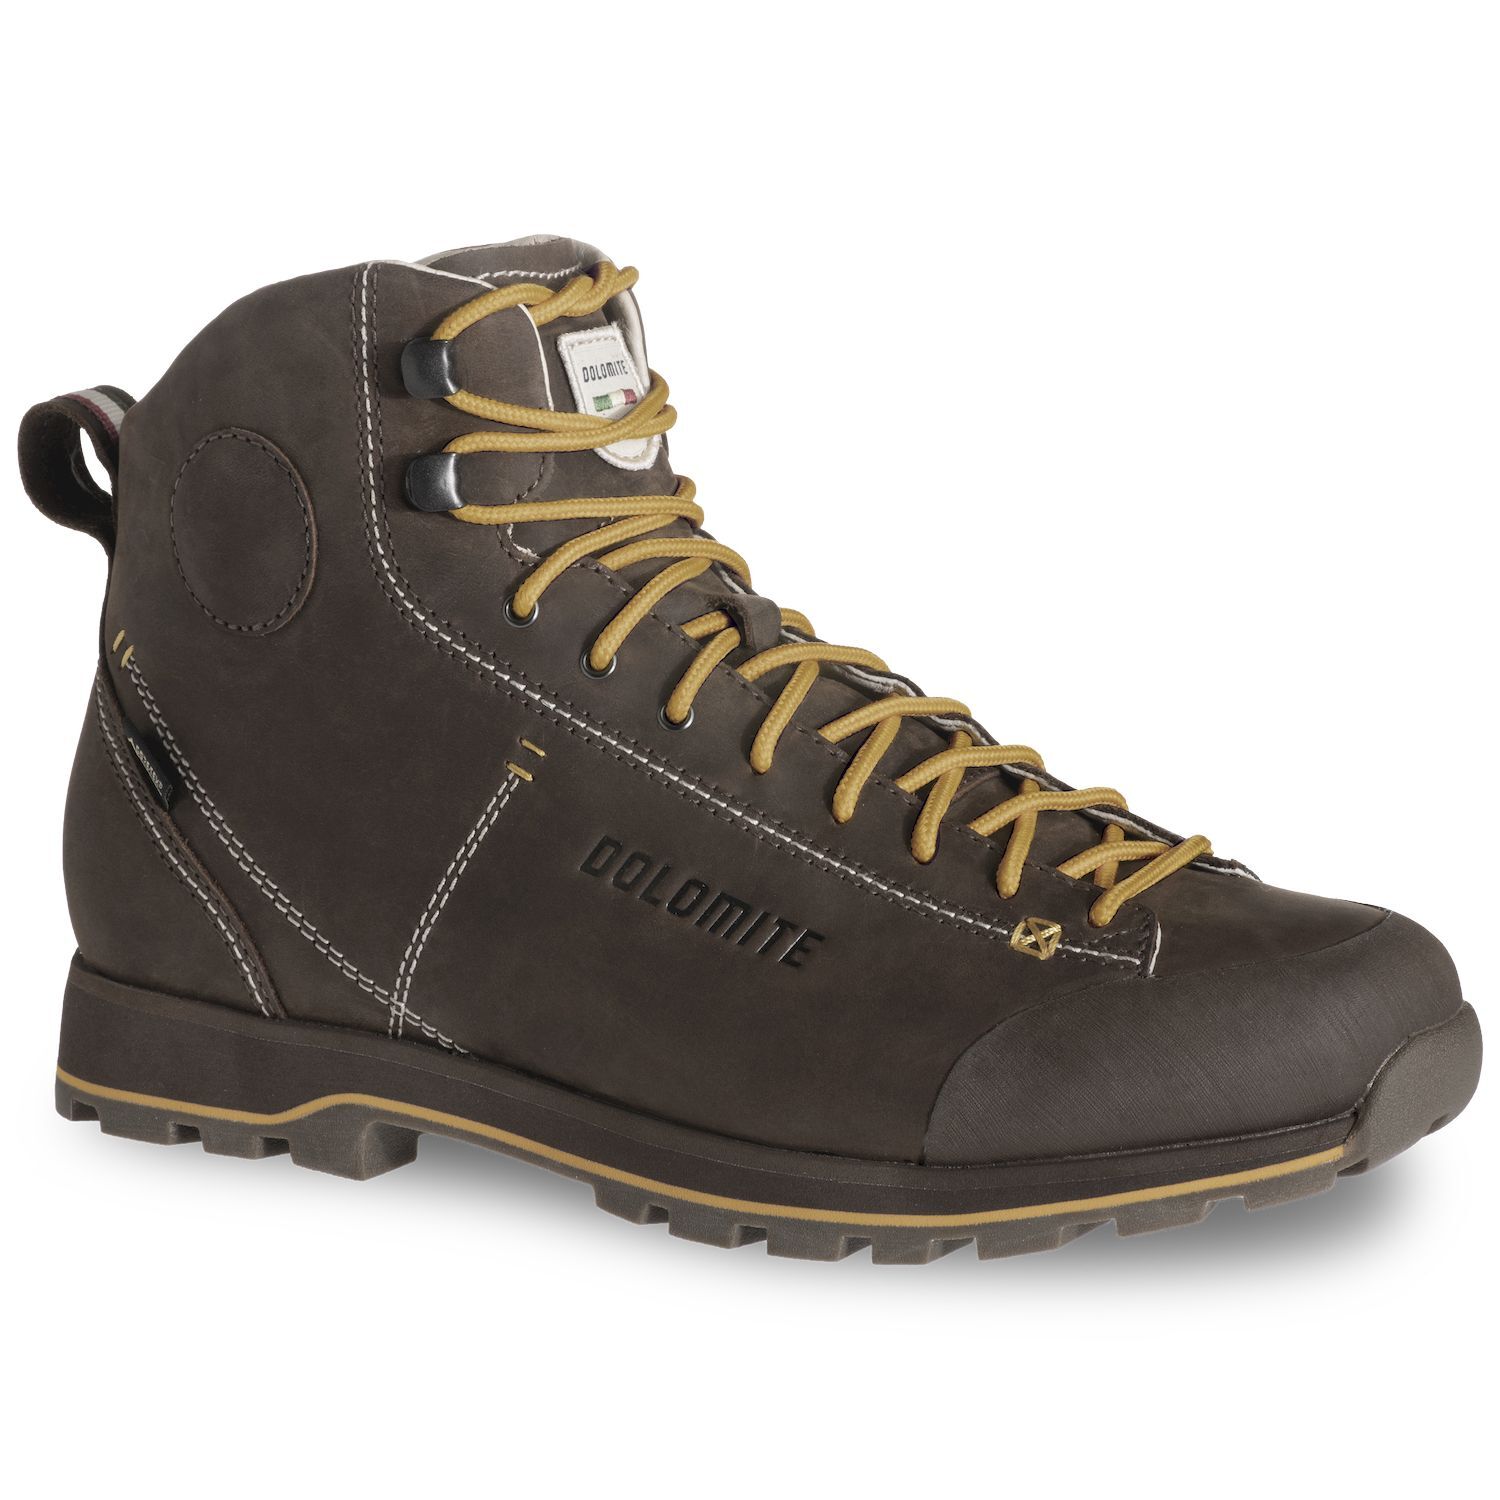 Dolomite 54 High FG GTX - Boots